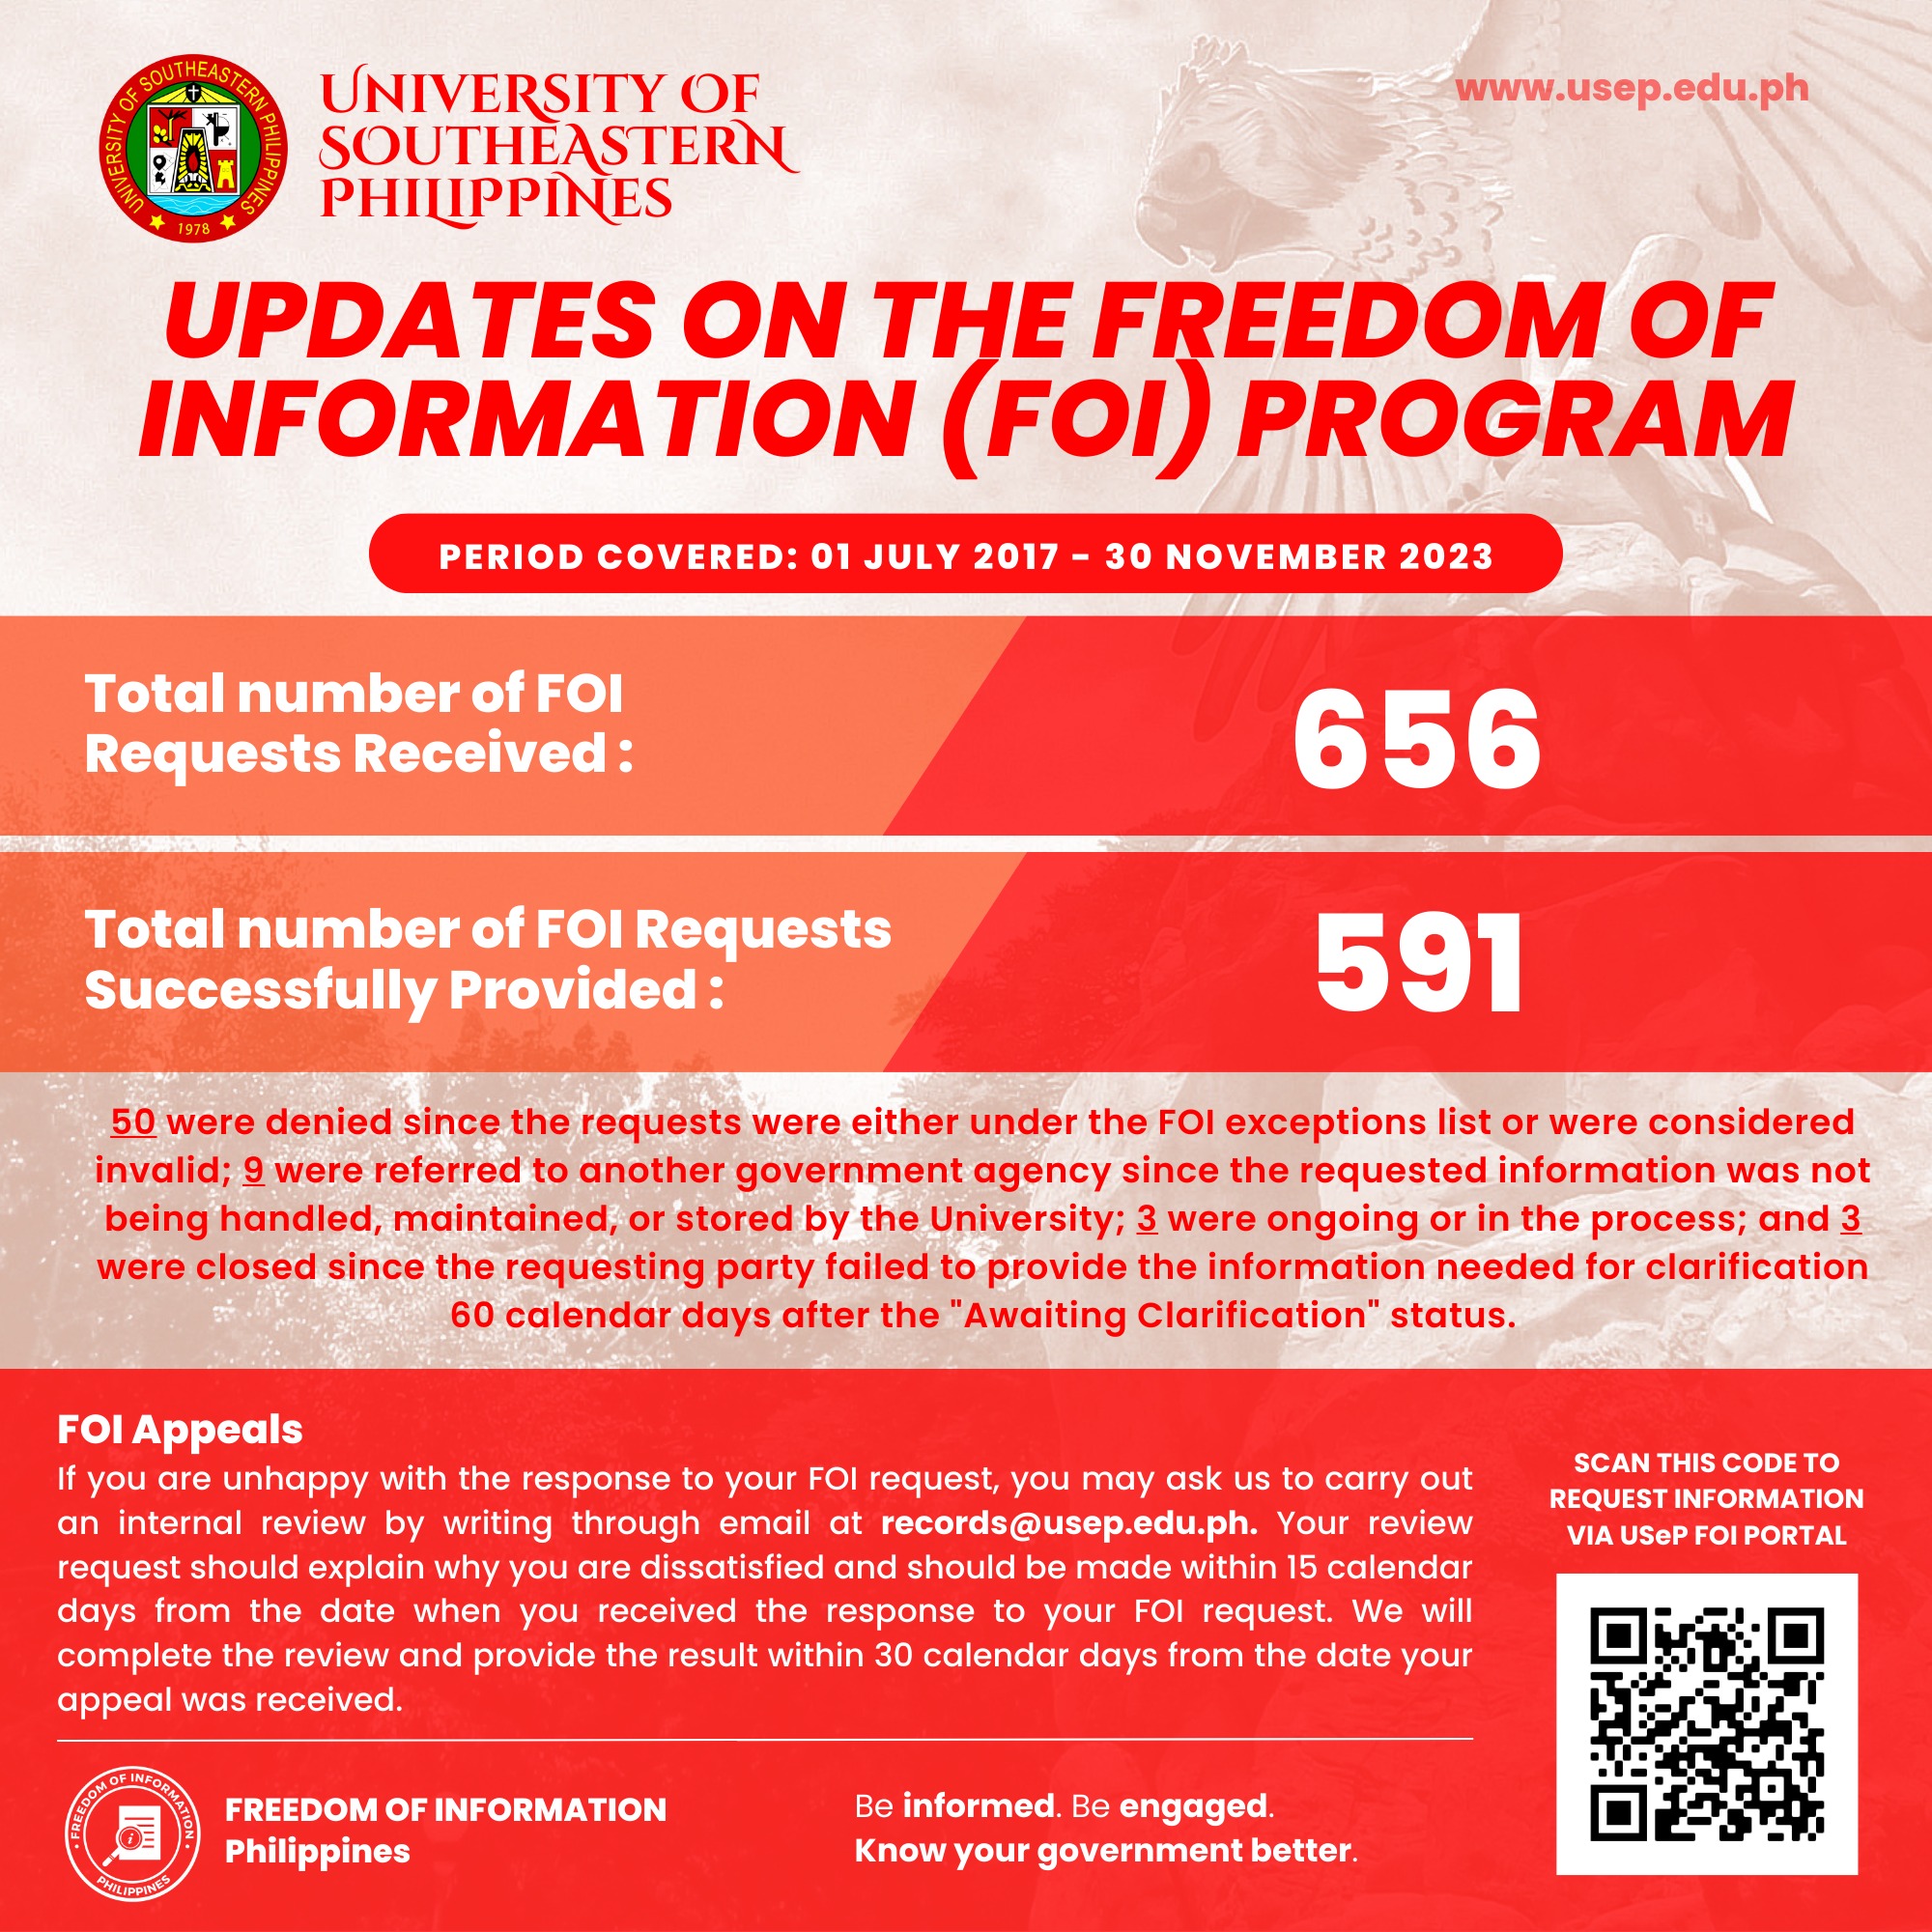 USeP FOI Program update as of November 2023